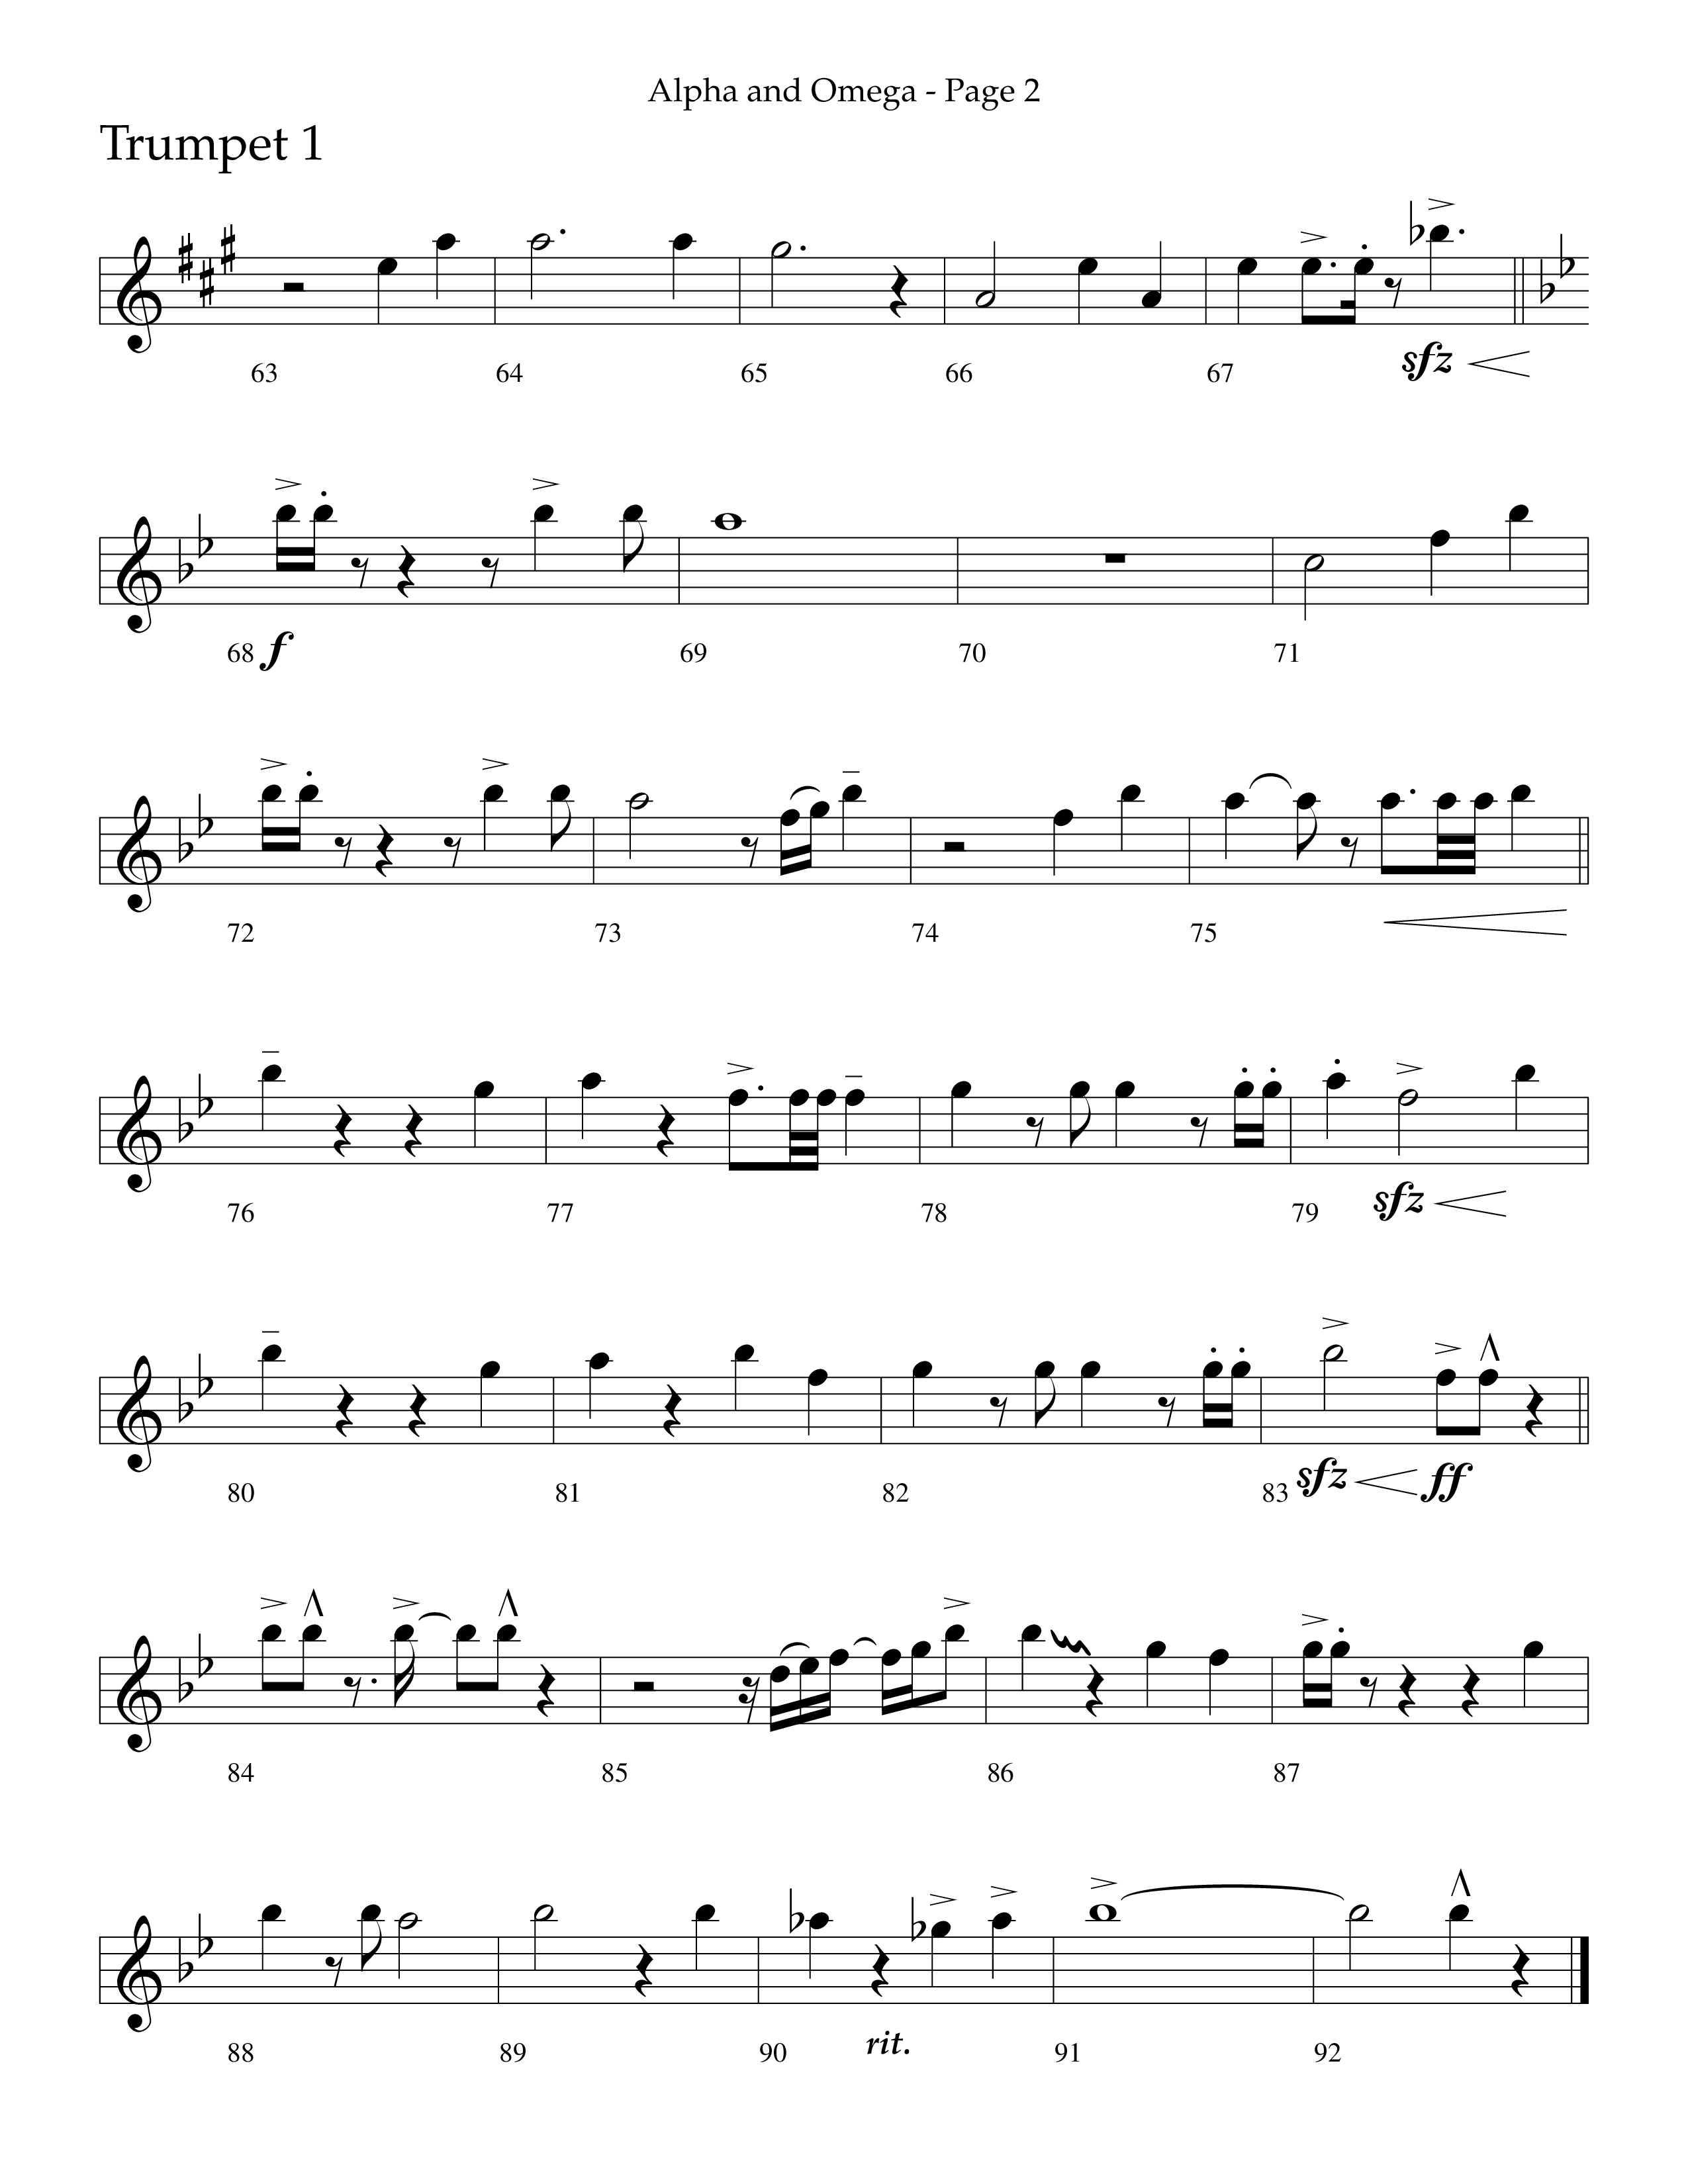 Alpha And Omega (Choral Anthem SATB) Trumpet 1 (Lifeway Choral / Arr. Cliff Duren)